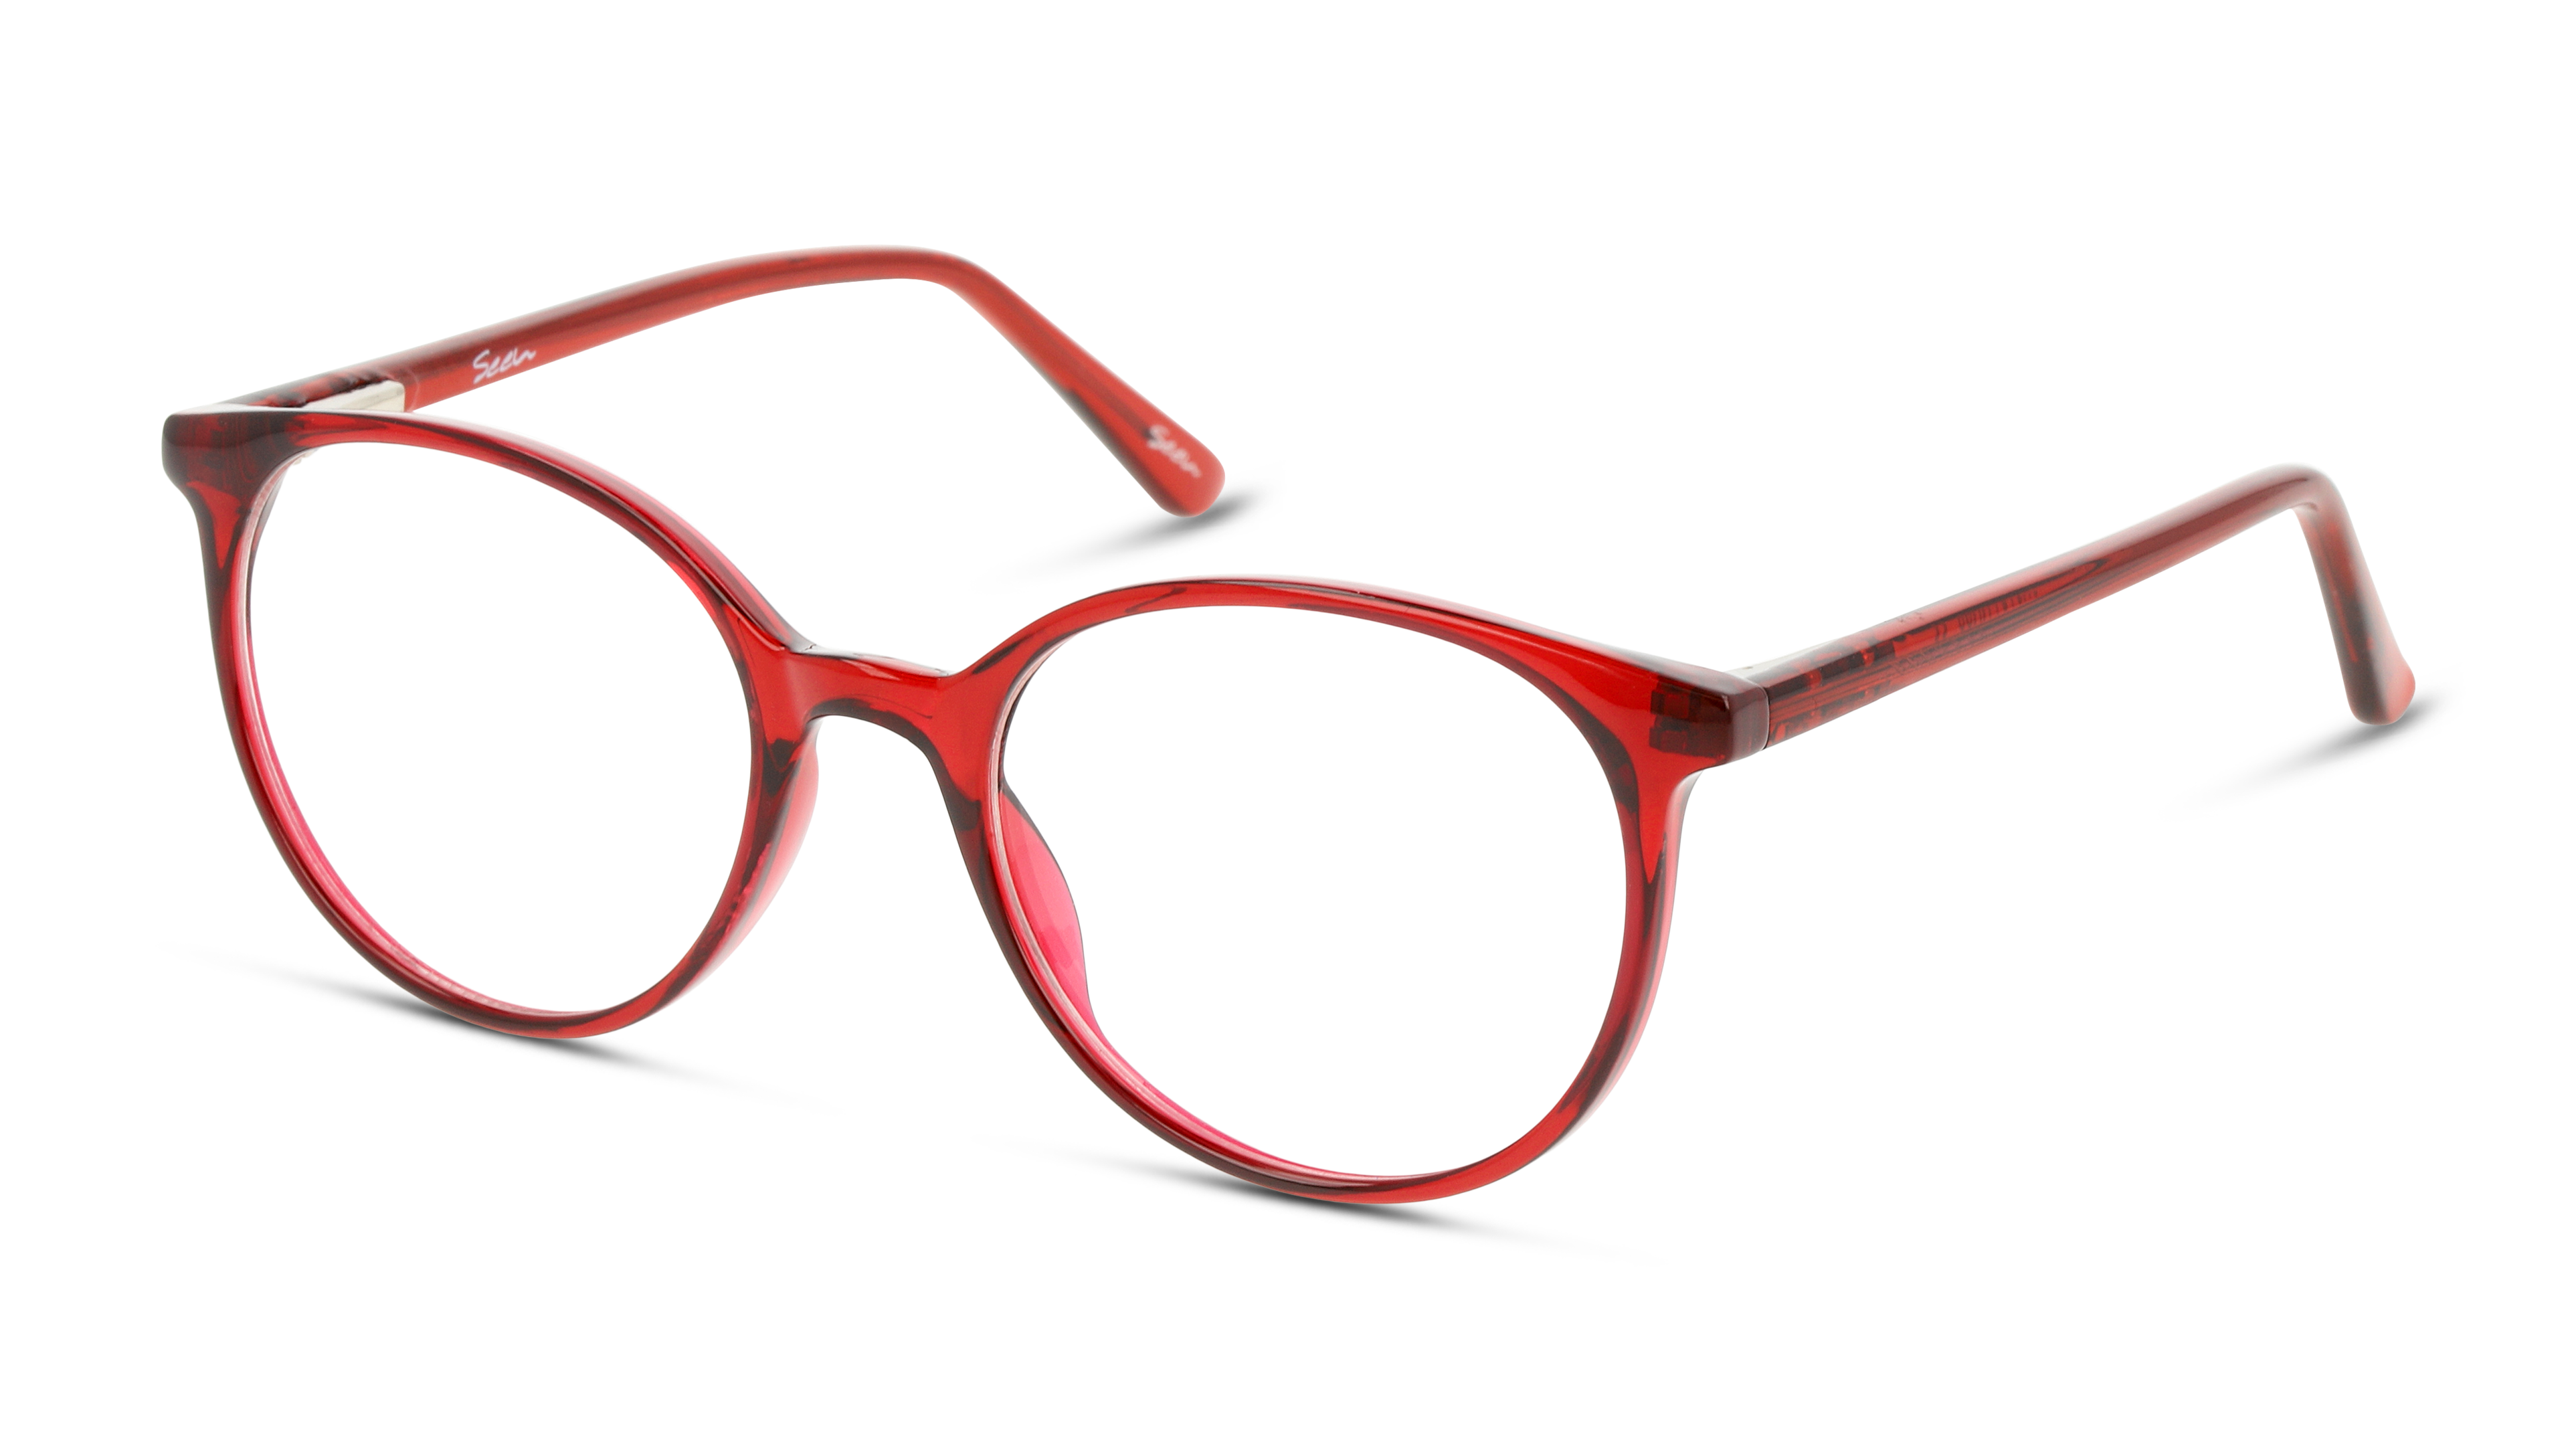 Angle_Left01 Seen SN JT01 (RR00) Children's Glasses Transparent / Transparent, Red